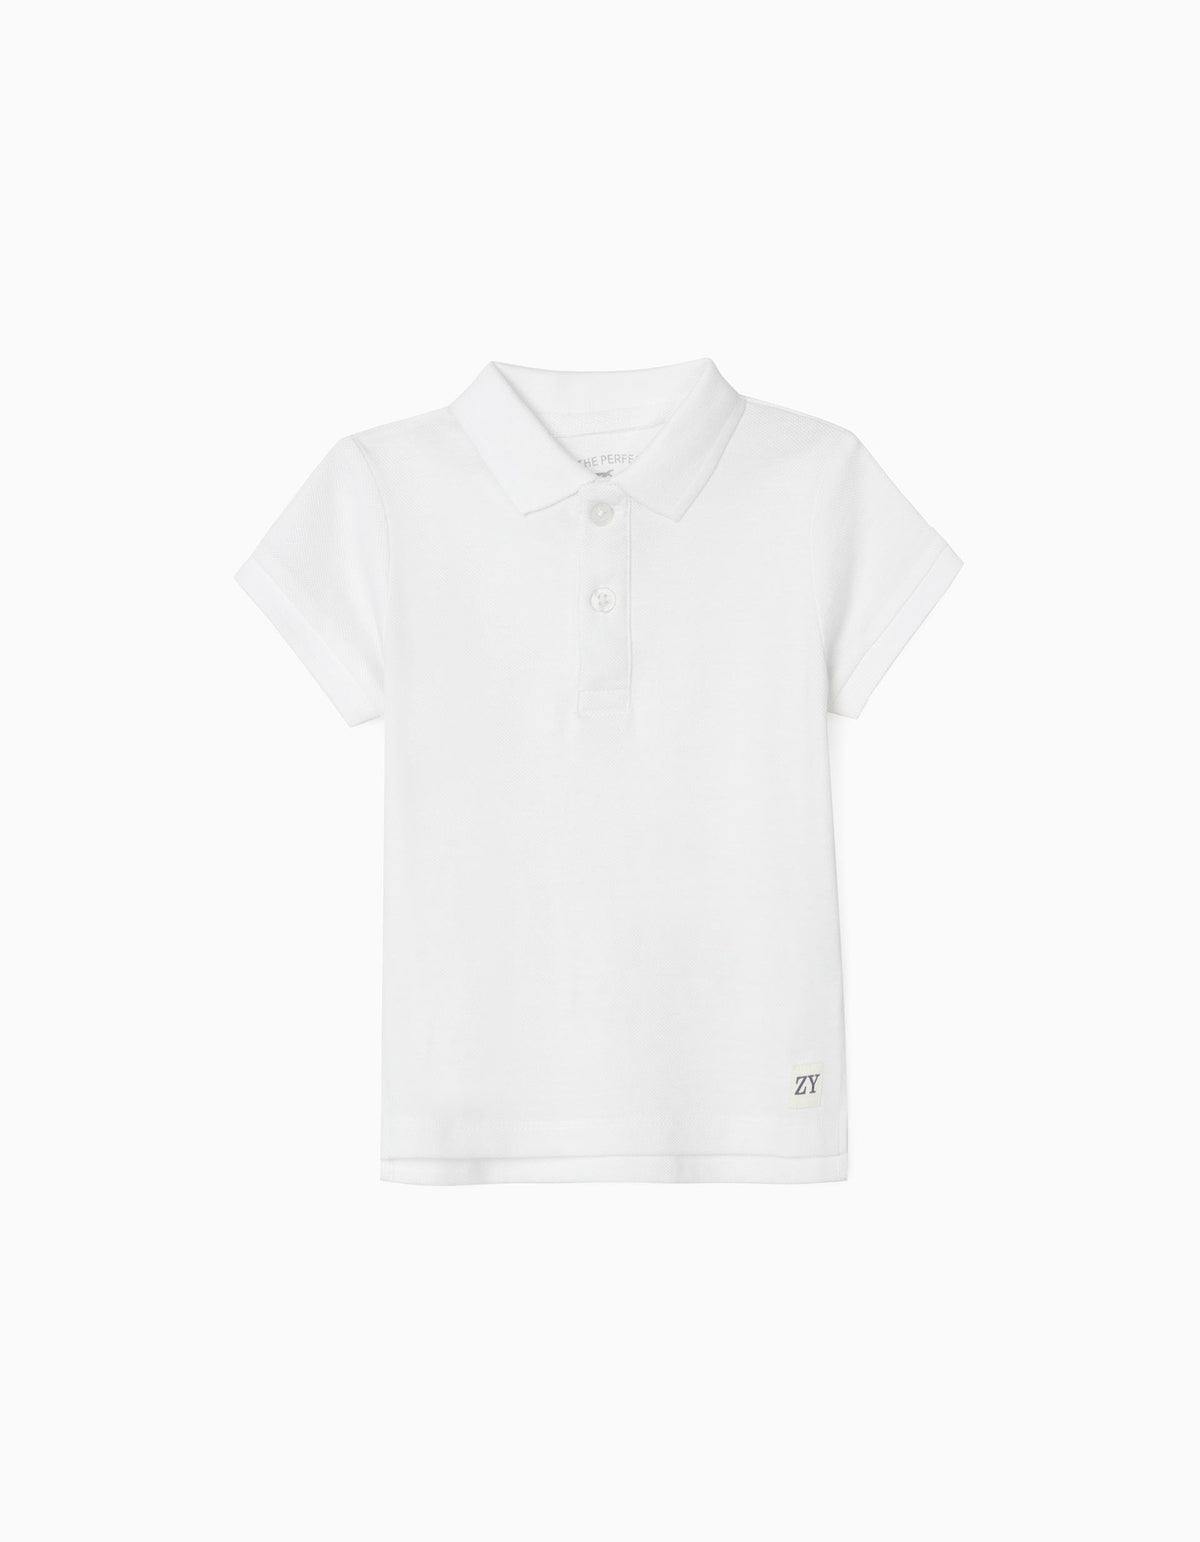 Zippy Baby Boy White Short Sleeve Polo Shirt